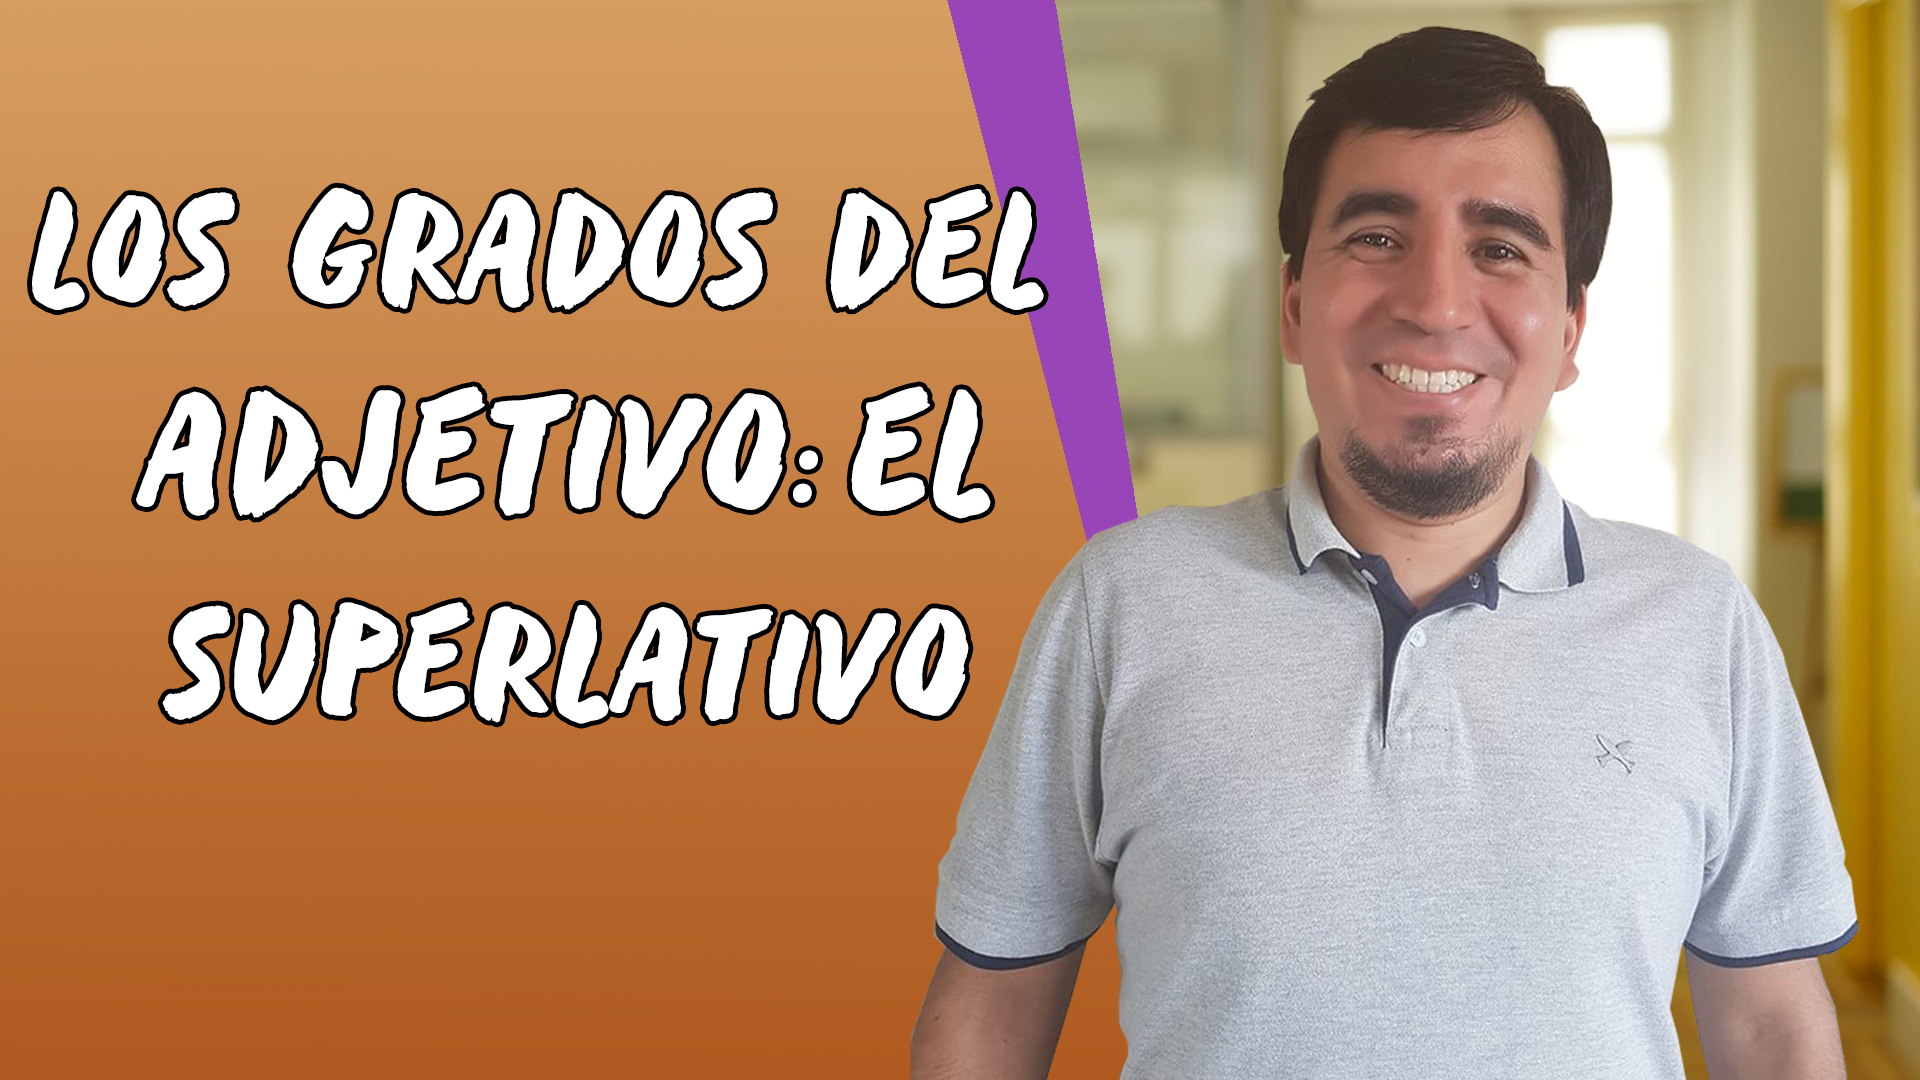 "Los Grados Del Adjetivo: El Superlativo" escrito sobre fundo laranja ao lado da imagem do professor